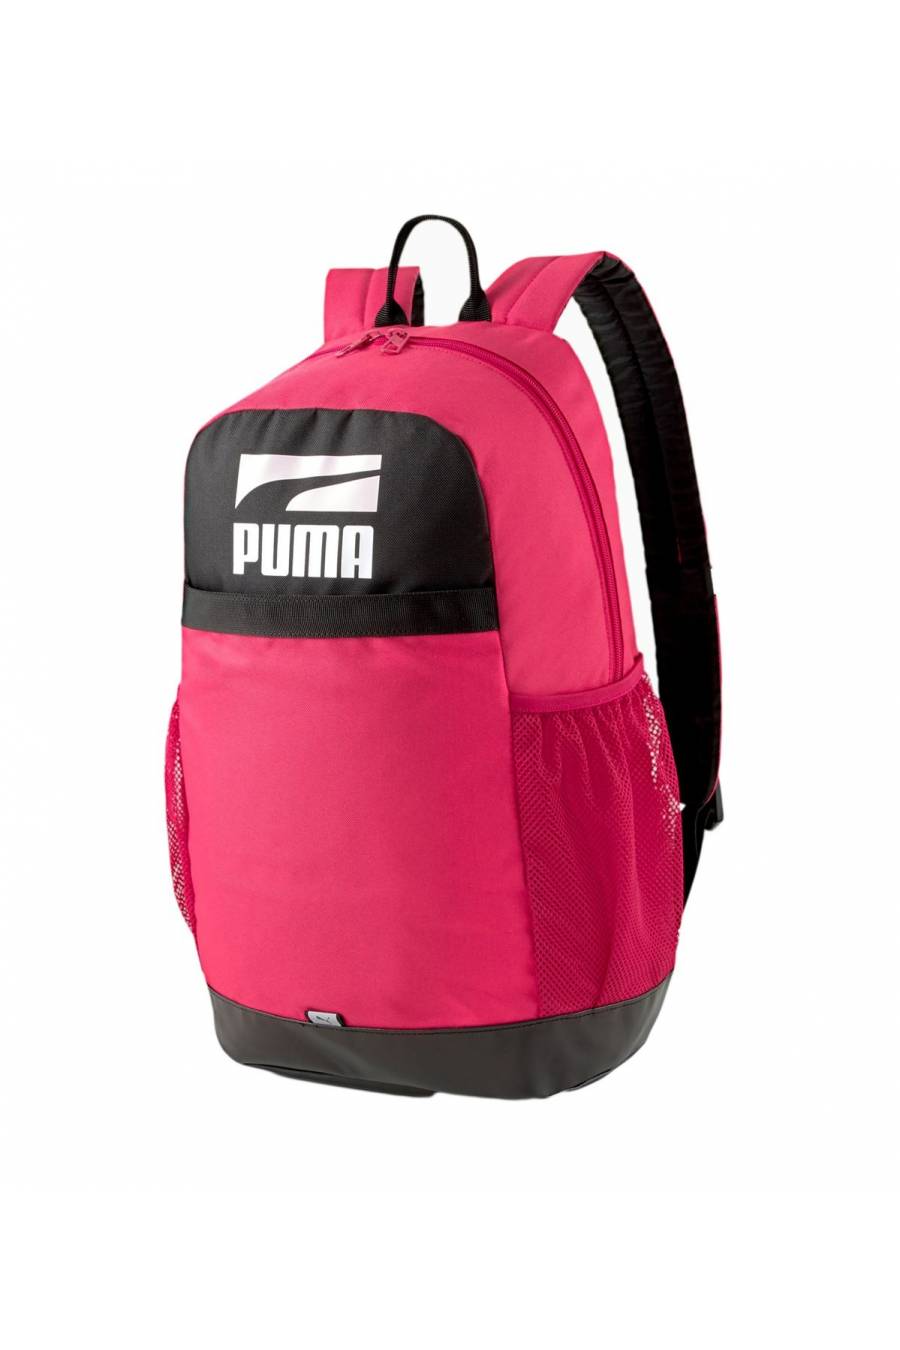 demoler Actor carril Mochila Puma Plus Backpack II Persian Red